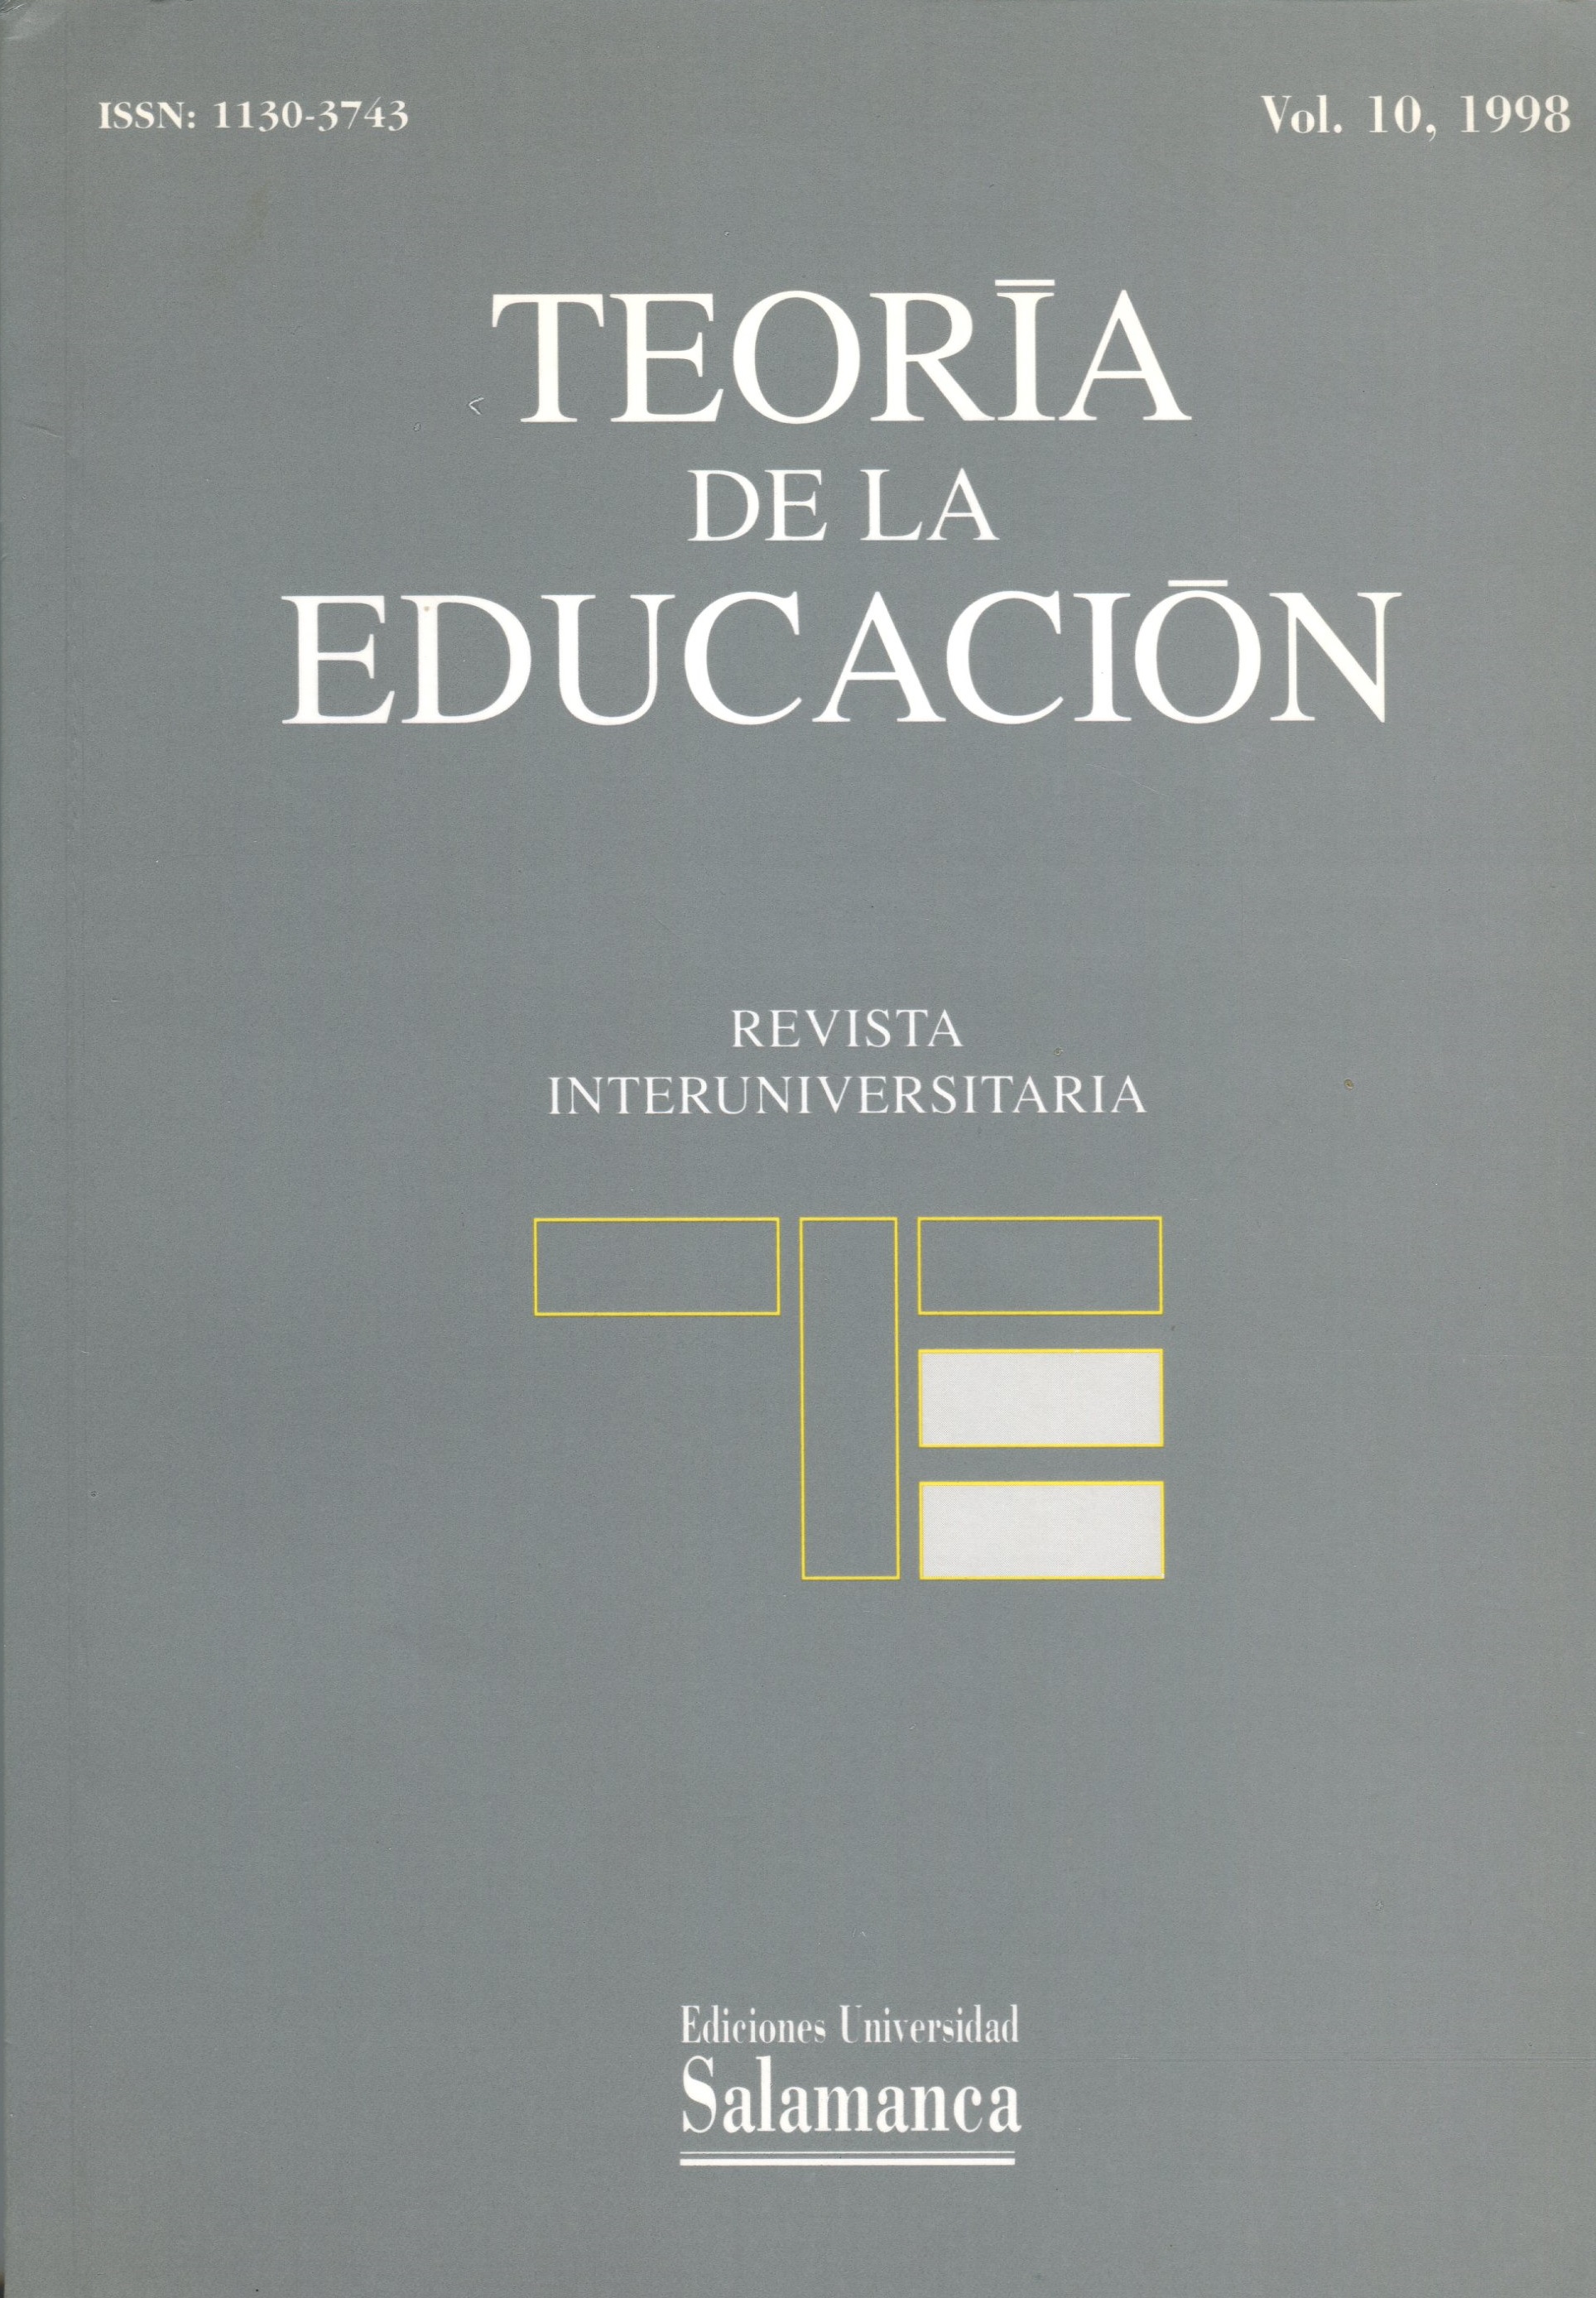                         Ver Vol. 10 (1998)
                    